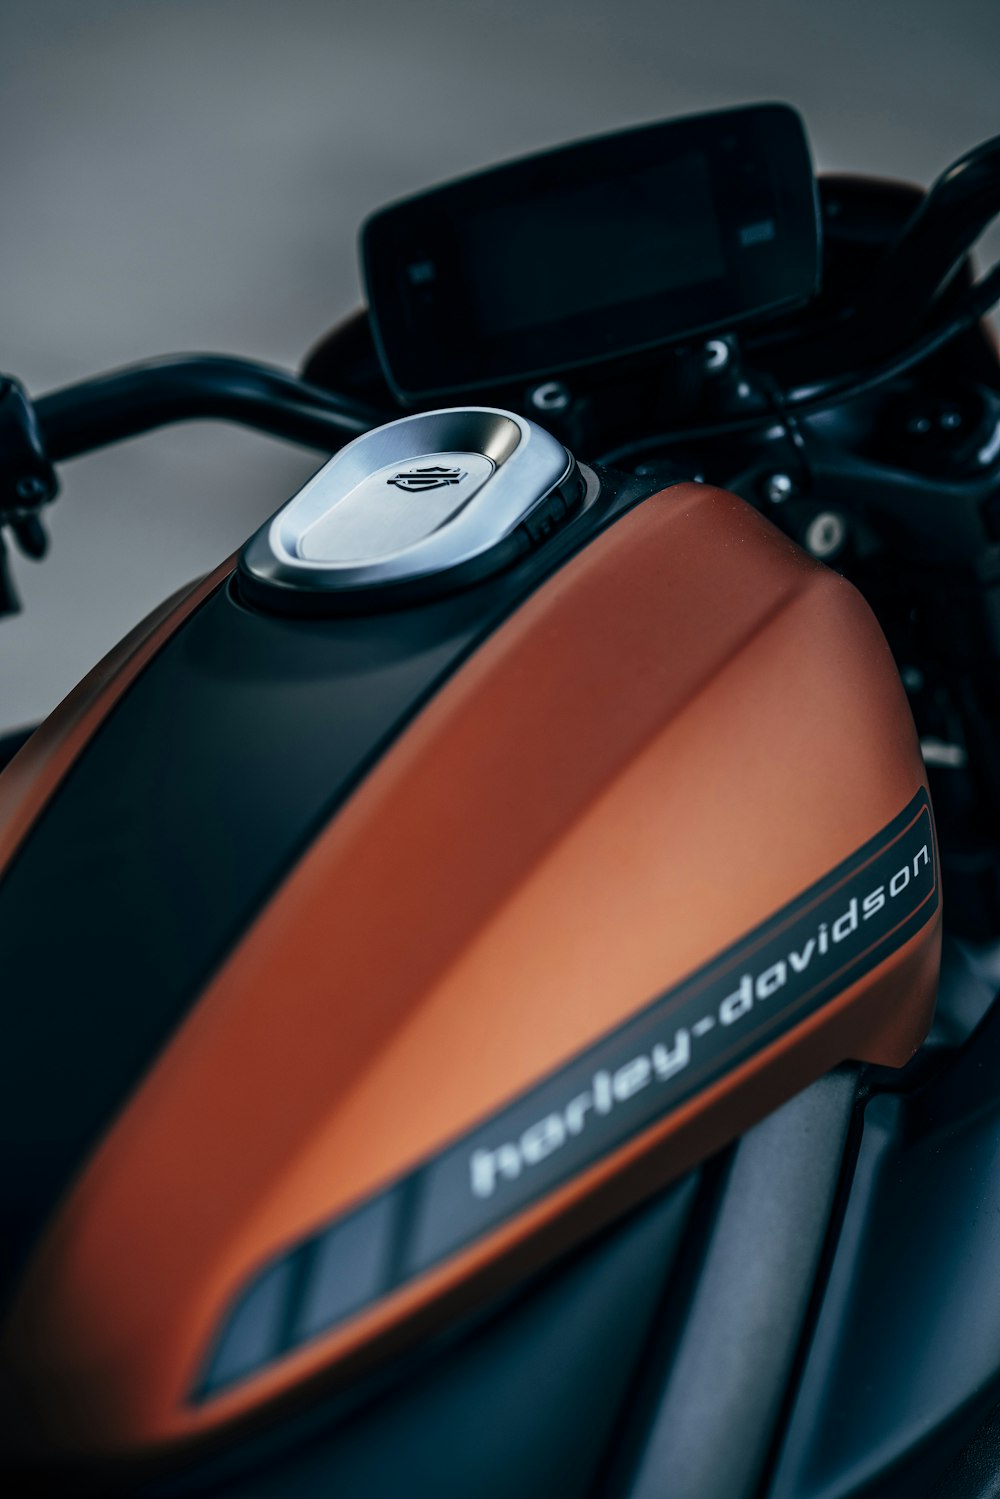 Motocicletta Harley-Davidson backbone arancione e nera